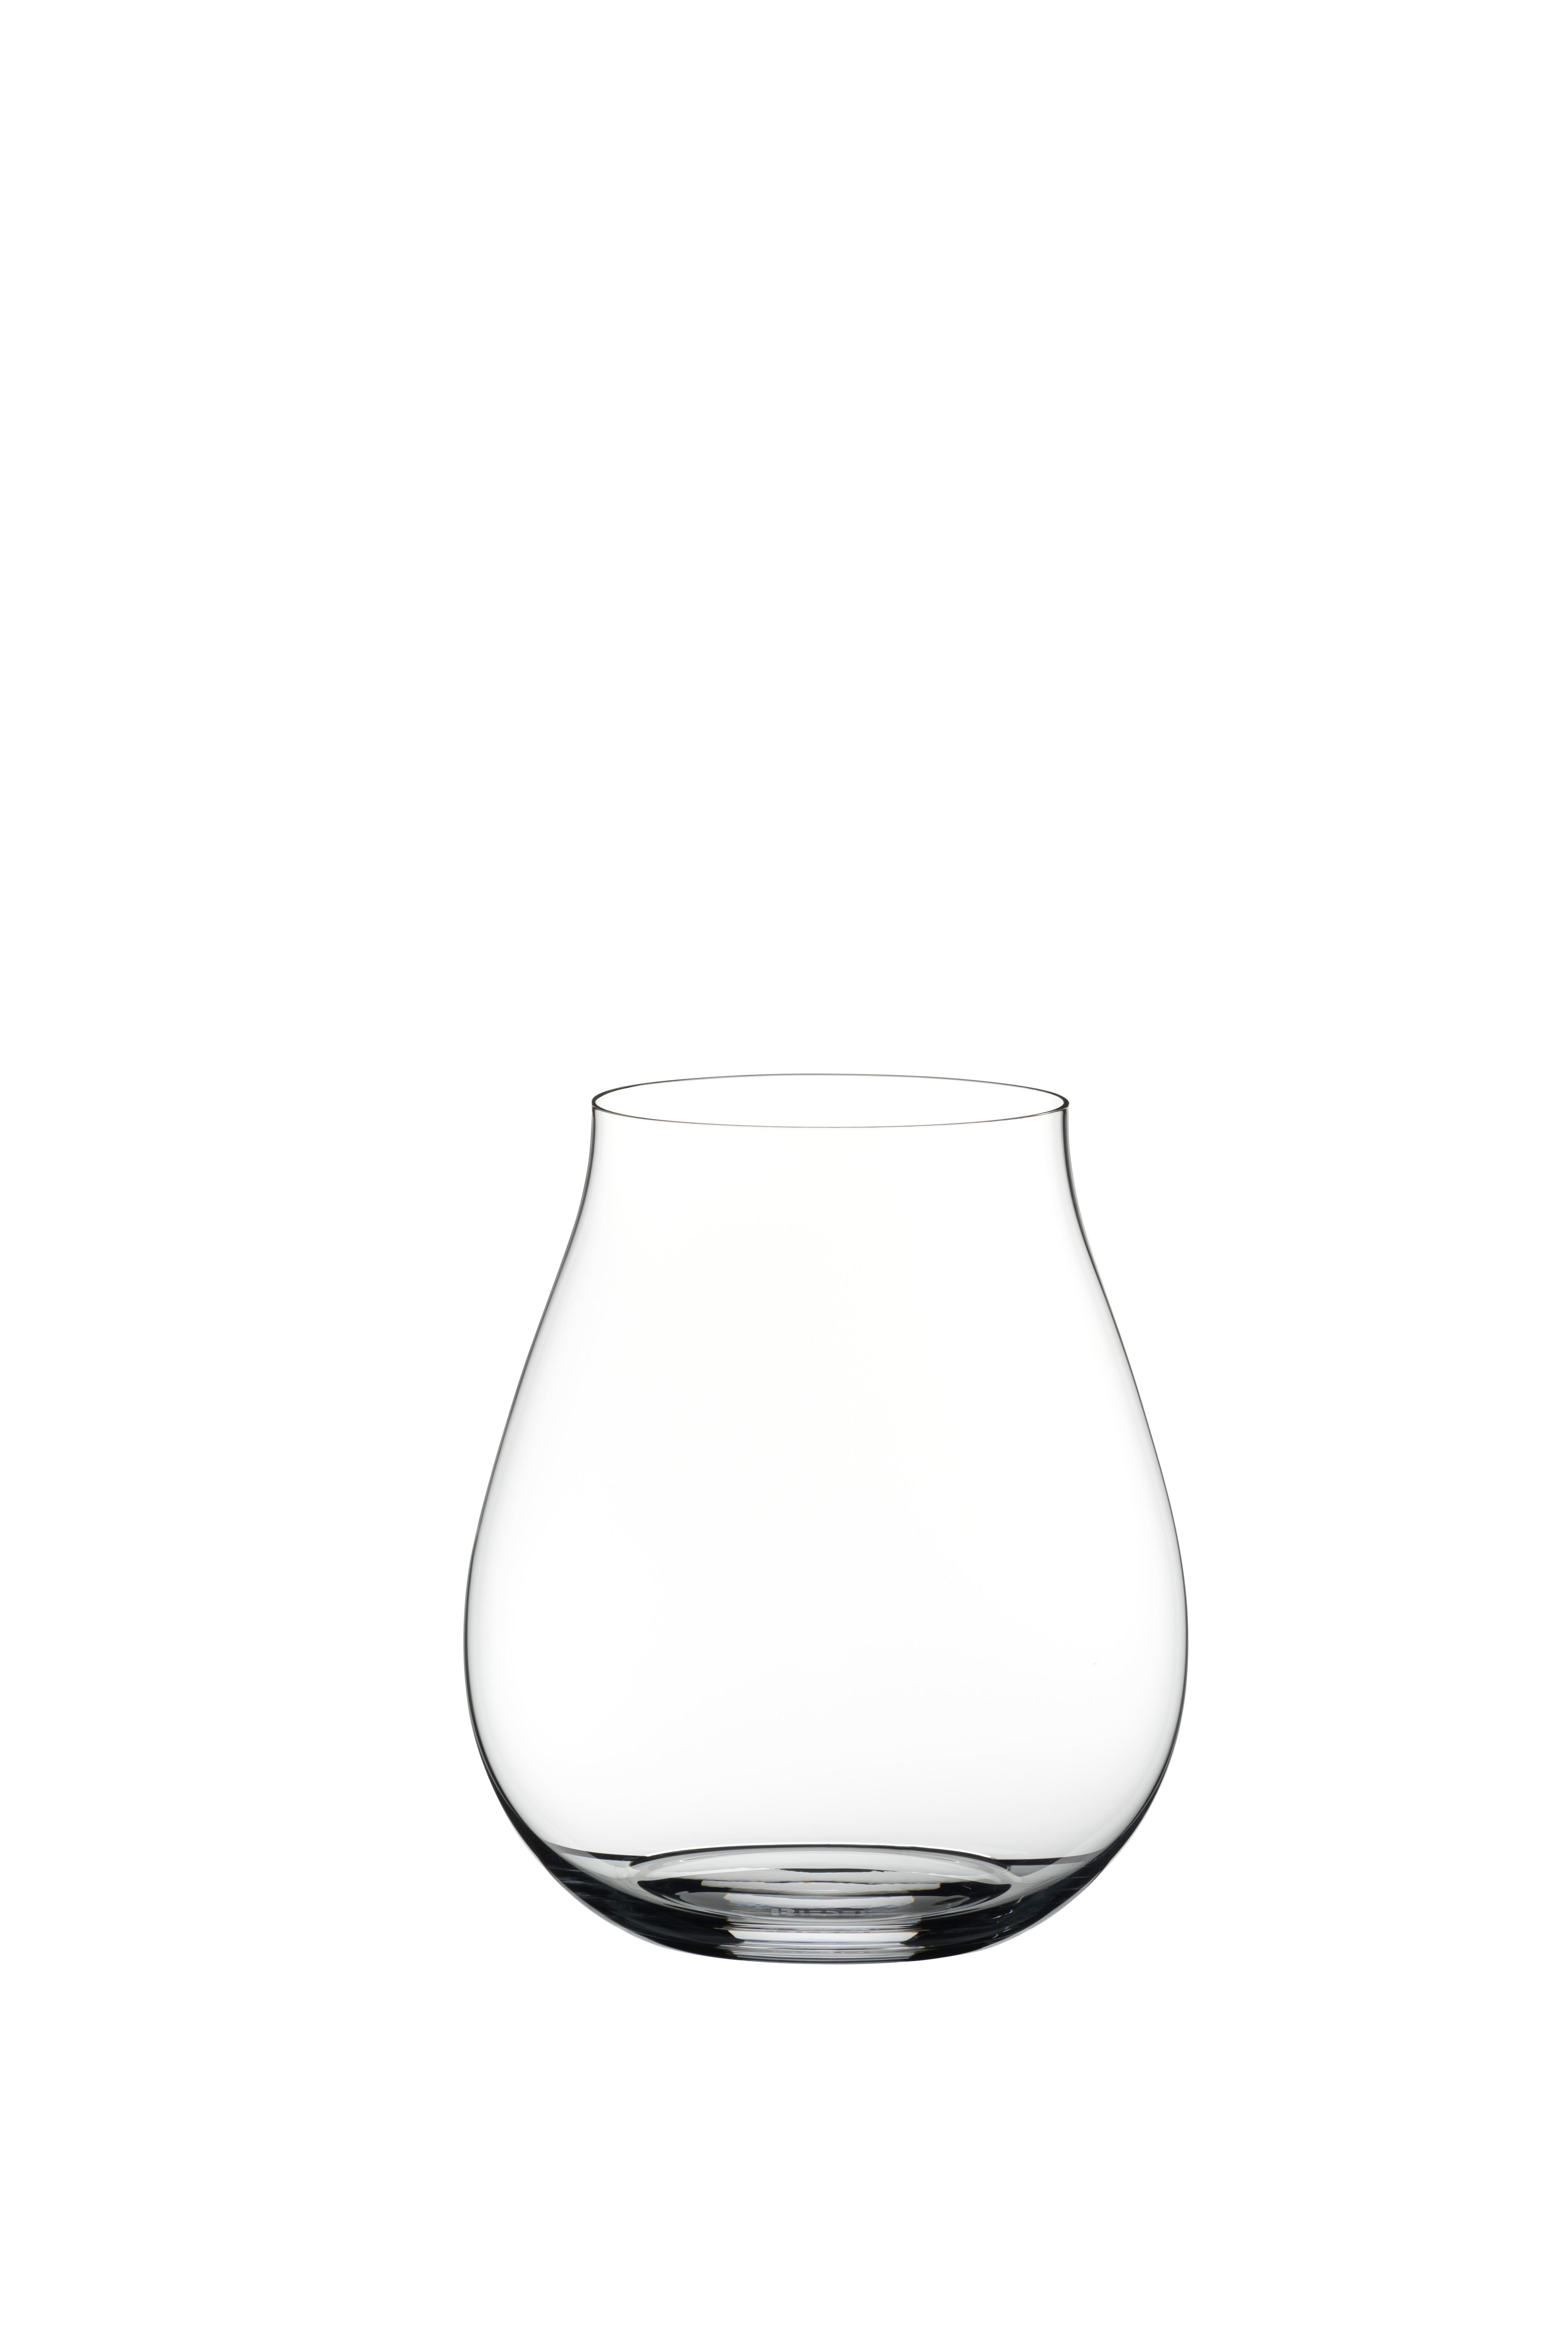 GLÄSERSET 4-teilig  - Design, Glas (21,9/13/21,9cm) - Riedel